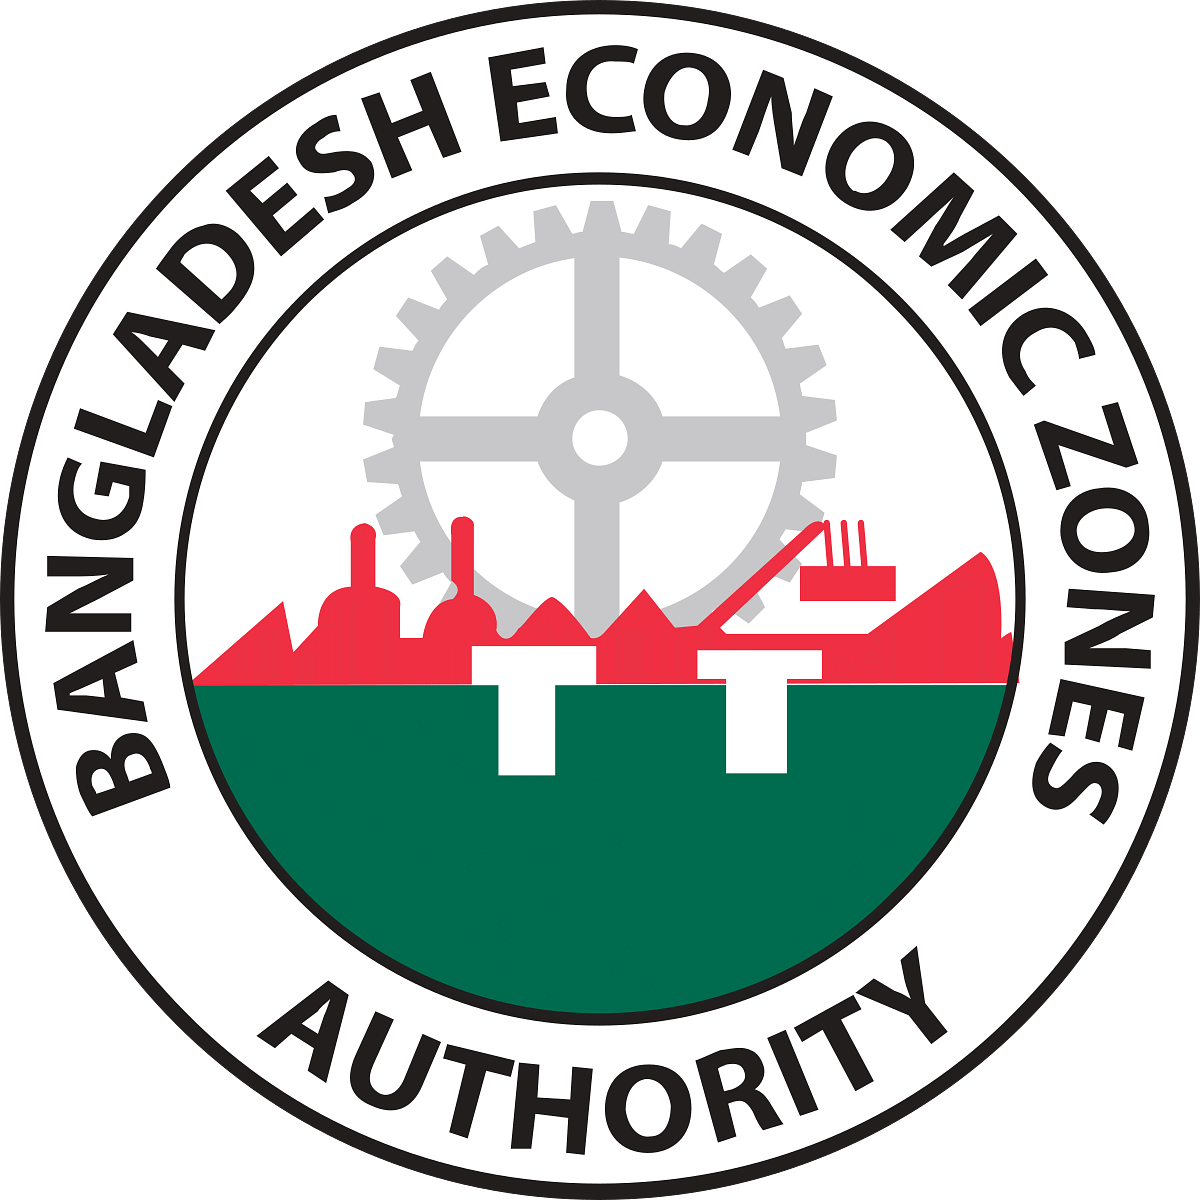 Bangladesh Economic Zones Authority logo. Photo: Wikipedia.com